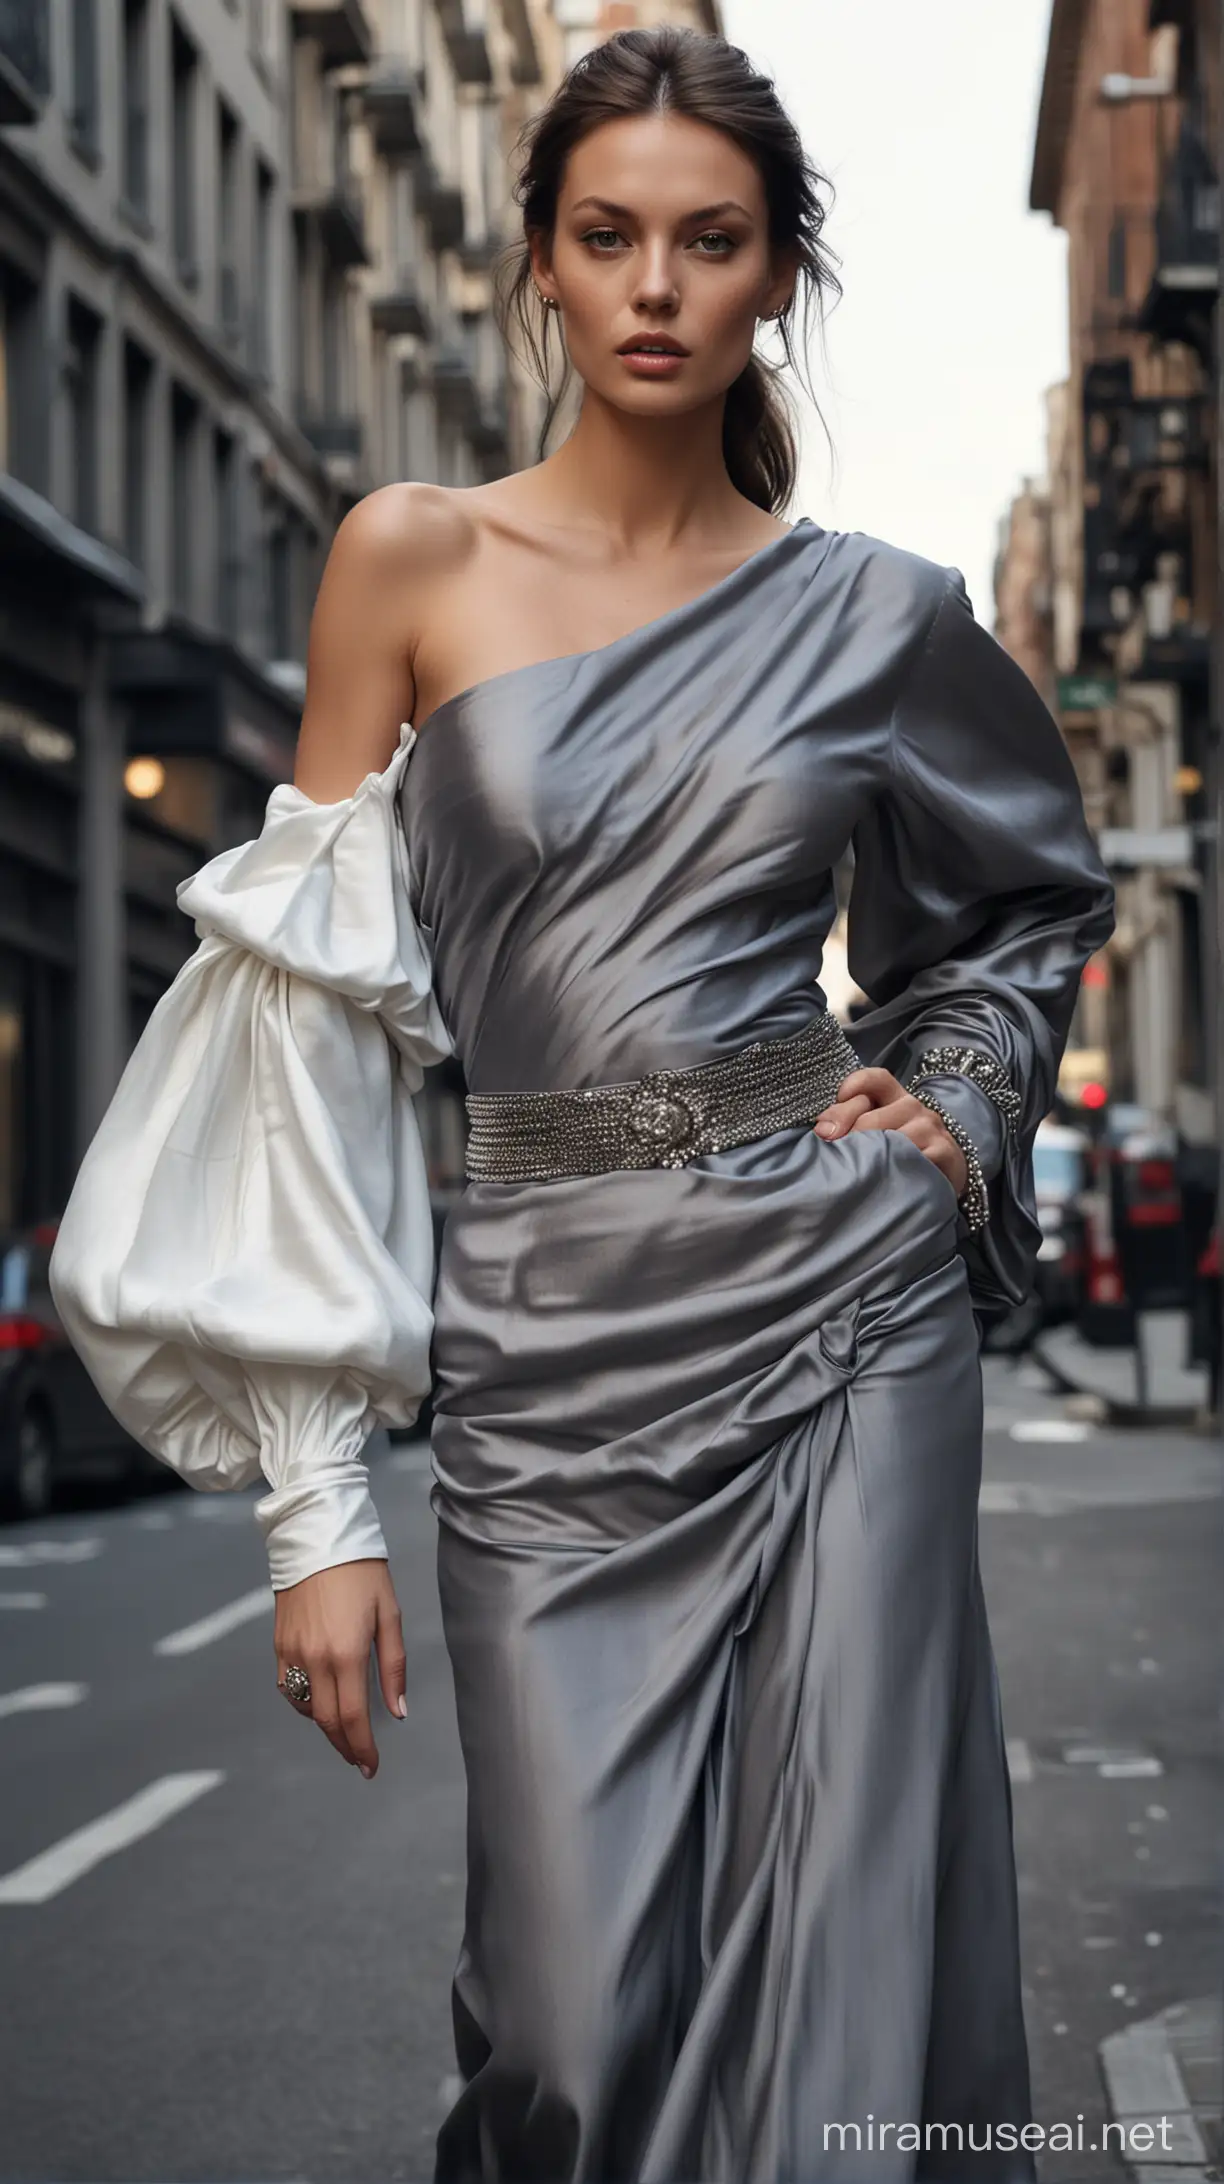 Elegant Supermodel Strutting in Urban Fashion Satin Blouse and Silk Skirt Ensemble